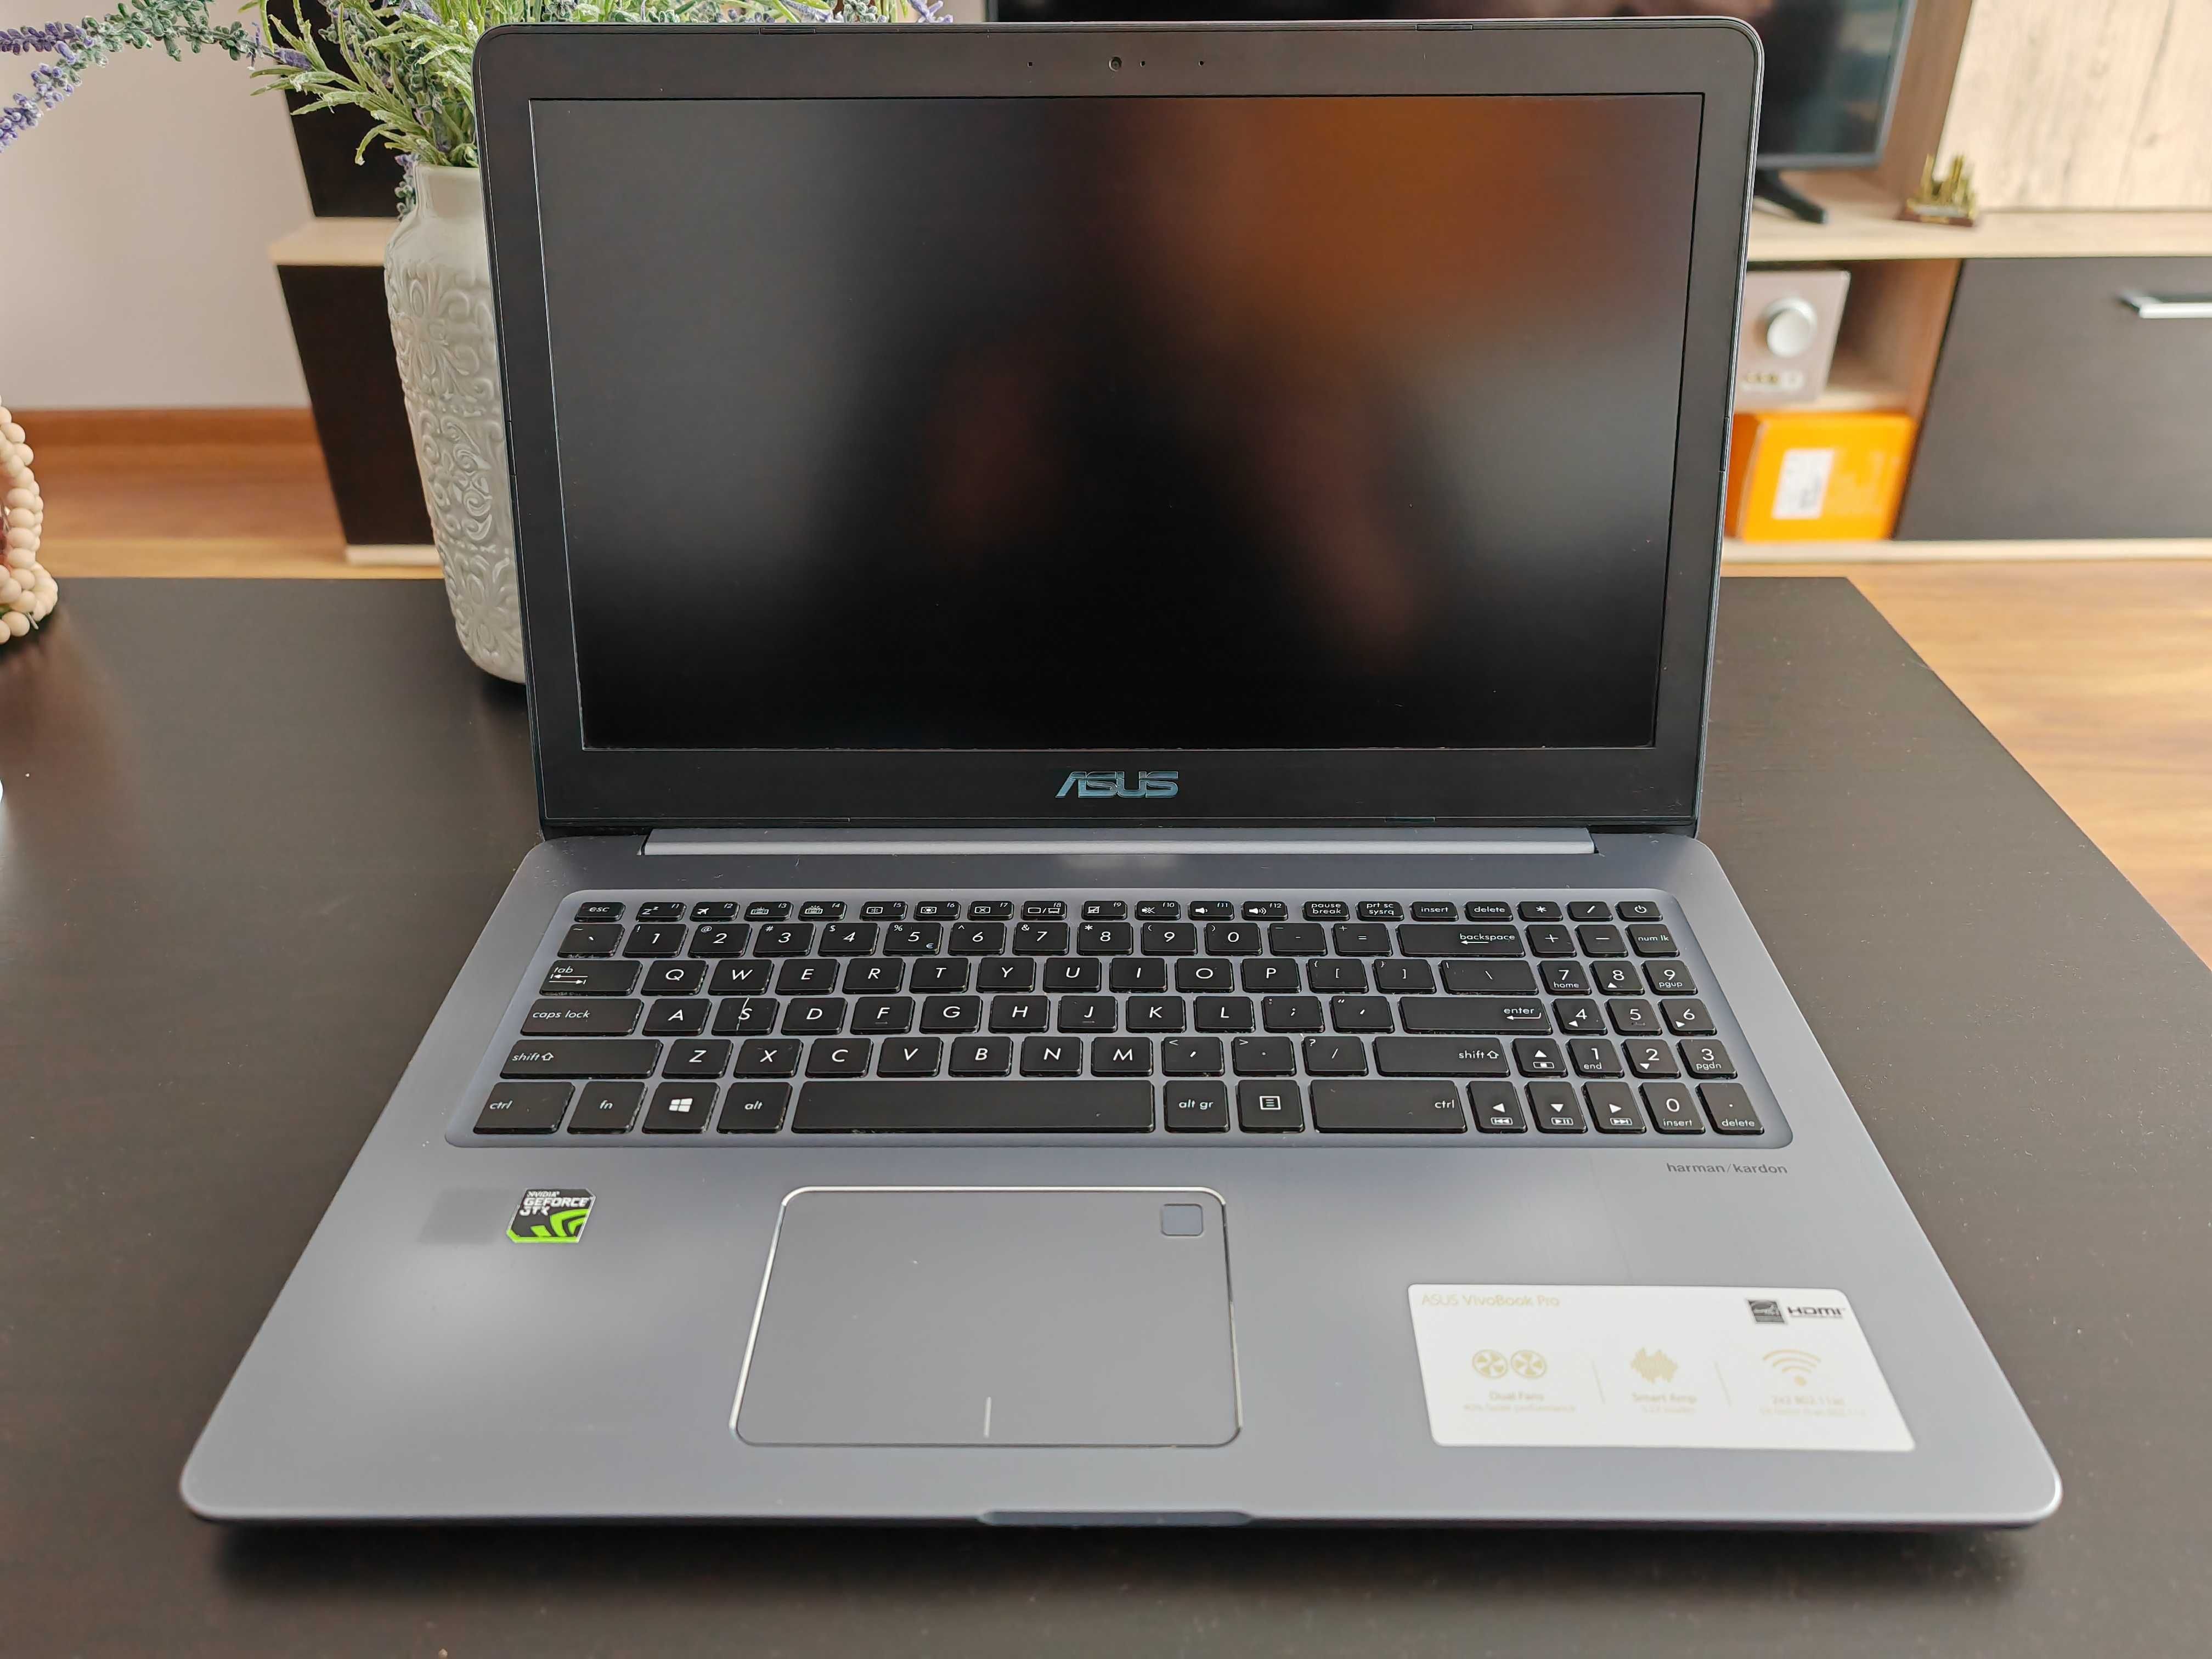 Laptop Asus VivoBook Pro N580V, I7-7700HQ, 16Gb ram, GTX1050, gaming